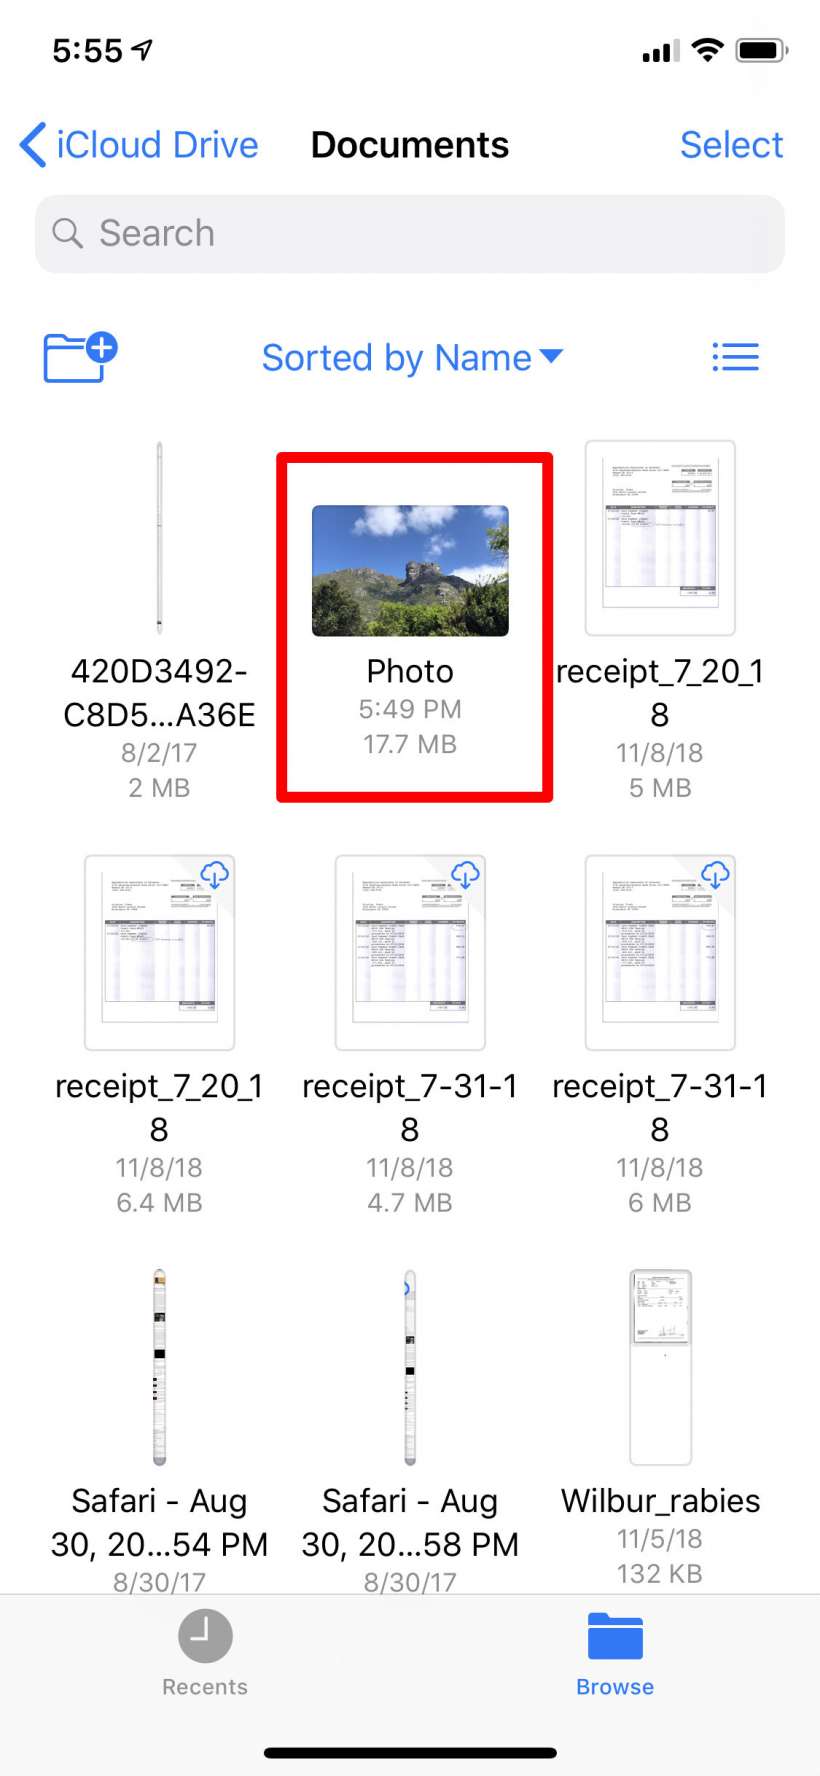 how to save a screenshot as a pdf on mac